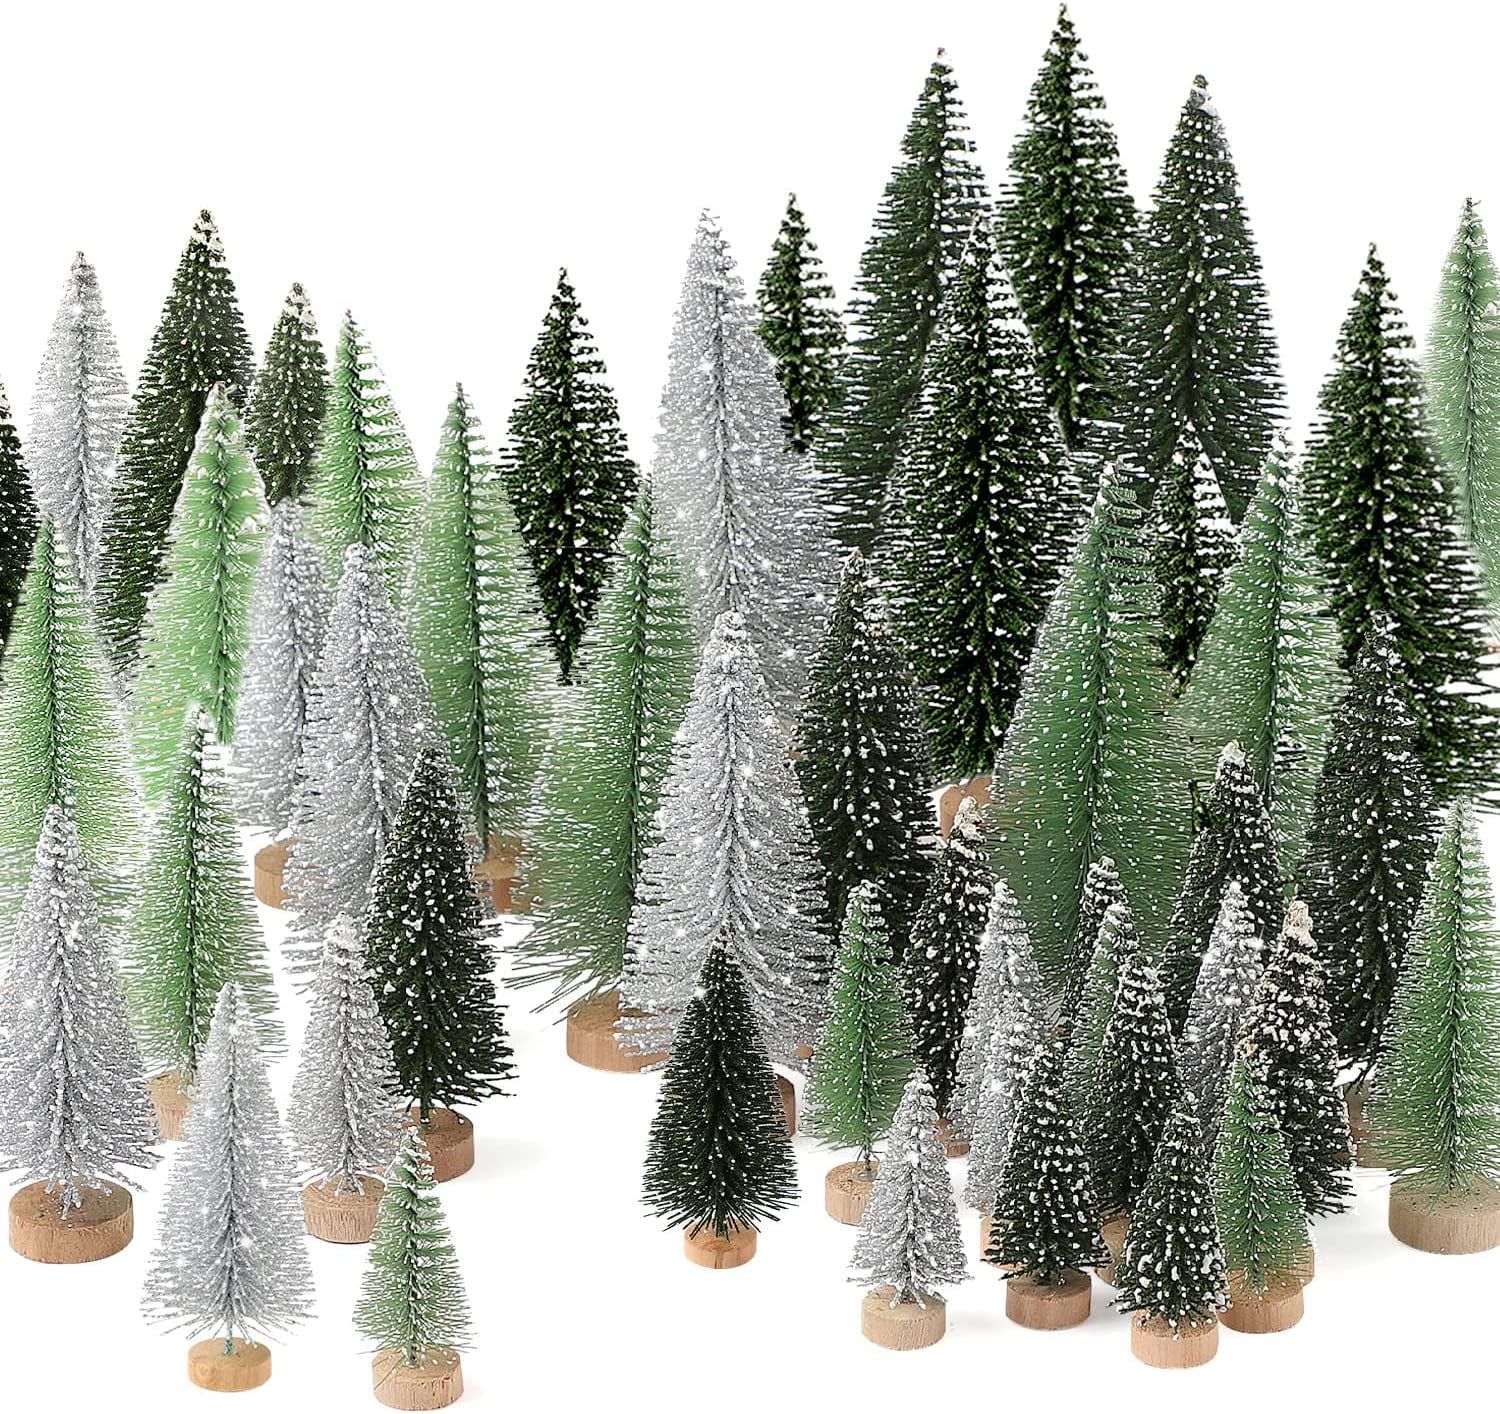 Ayieyill 30Pcs Mini Christmas Trees - Artificial Christmas Trees Bottle Brush Trees with 5 Sizes,... | Walmart (US)